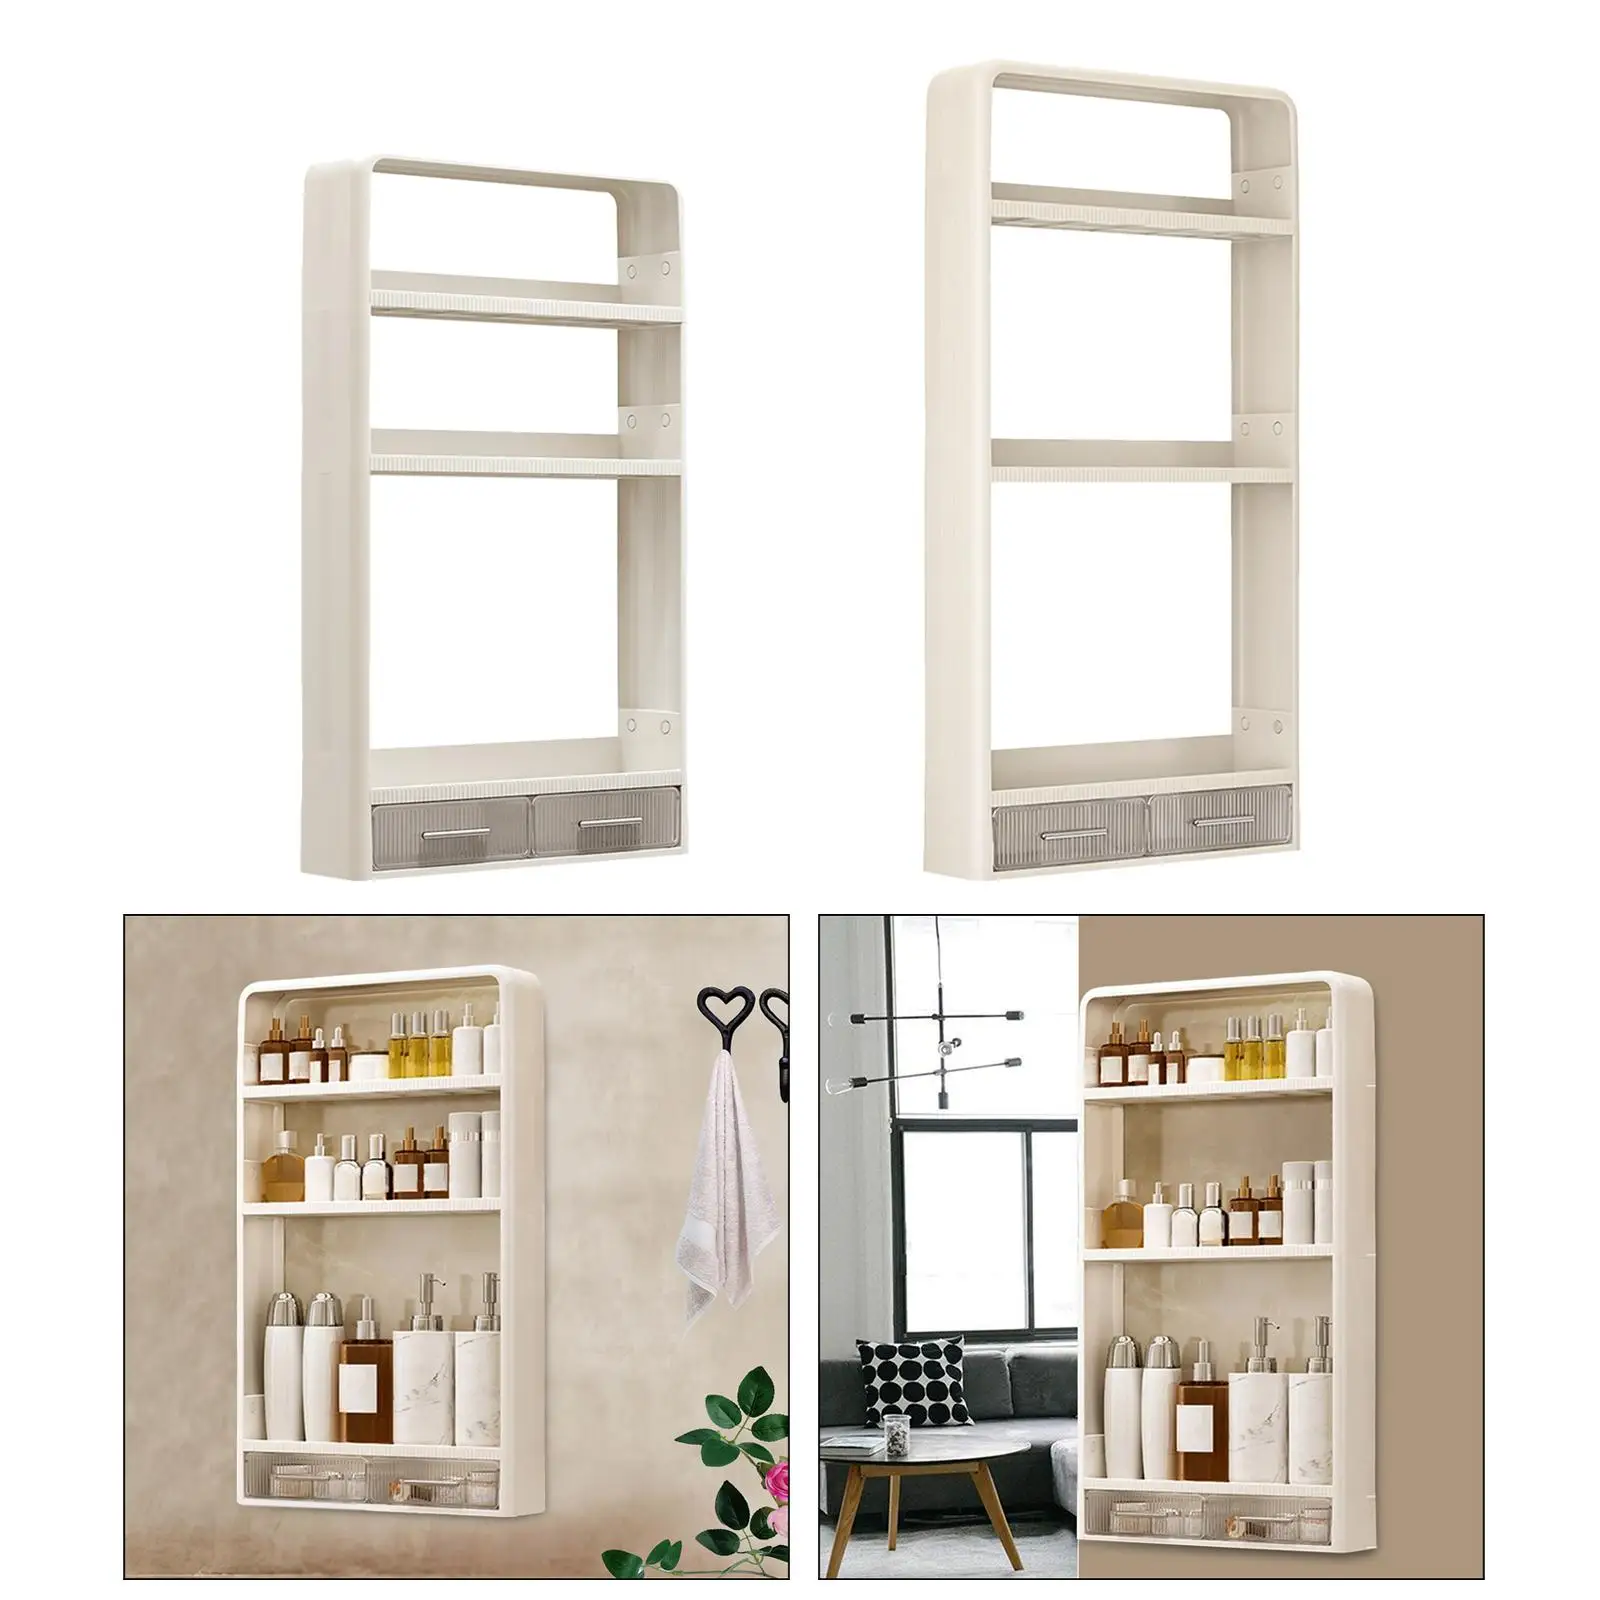 Shower Rack Makeup Wall Shelf with Drawers Toilet Shelf Organizer Wall Floating Shelves for Bedroom Kitchen Hotel Bathroom